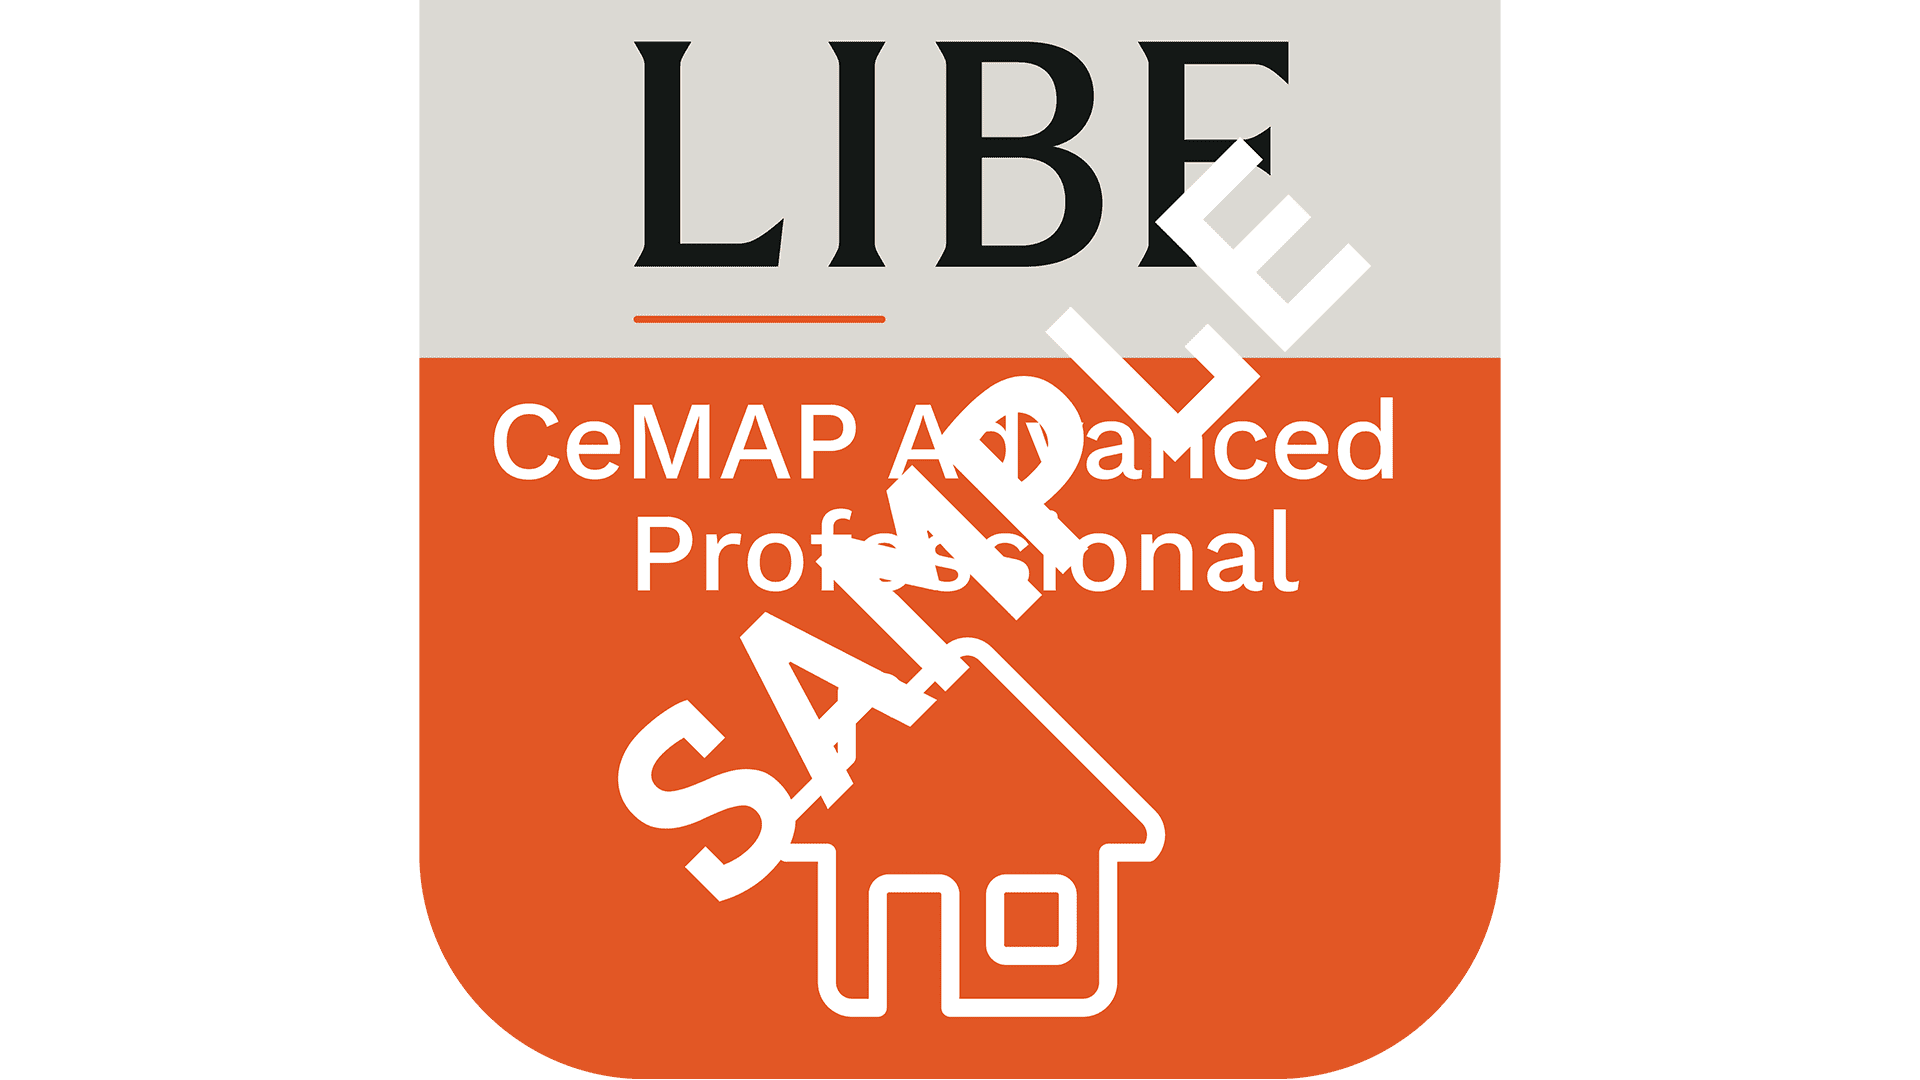 CeMAP Advanced Professional digital badge